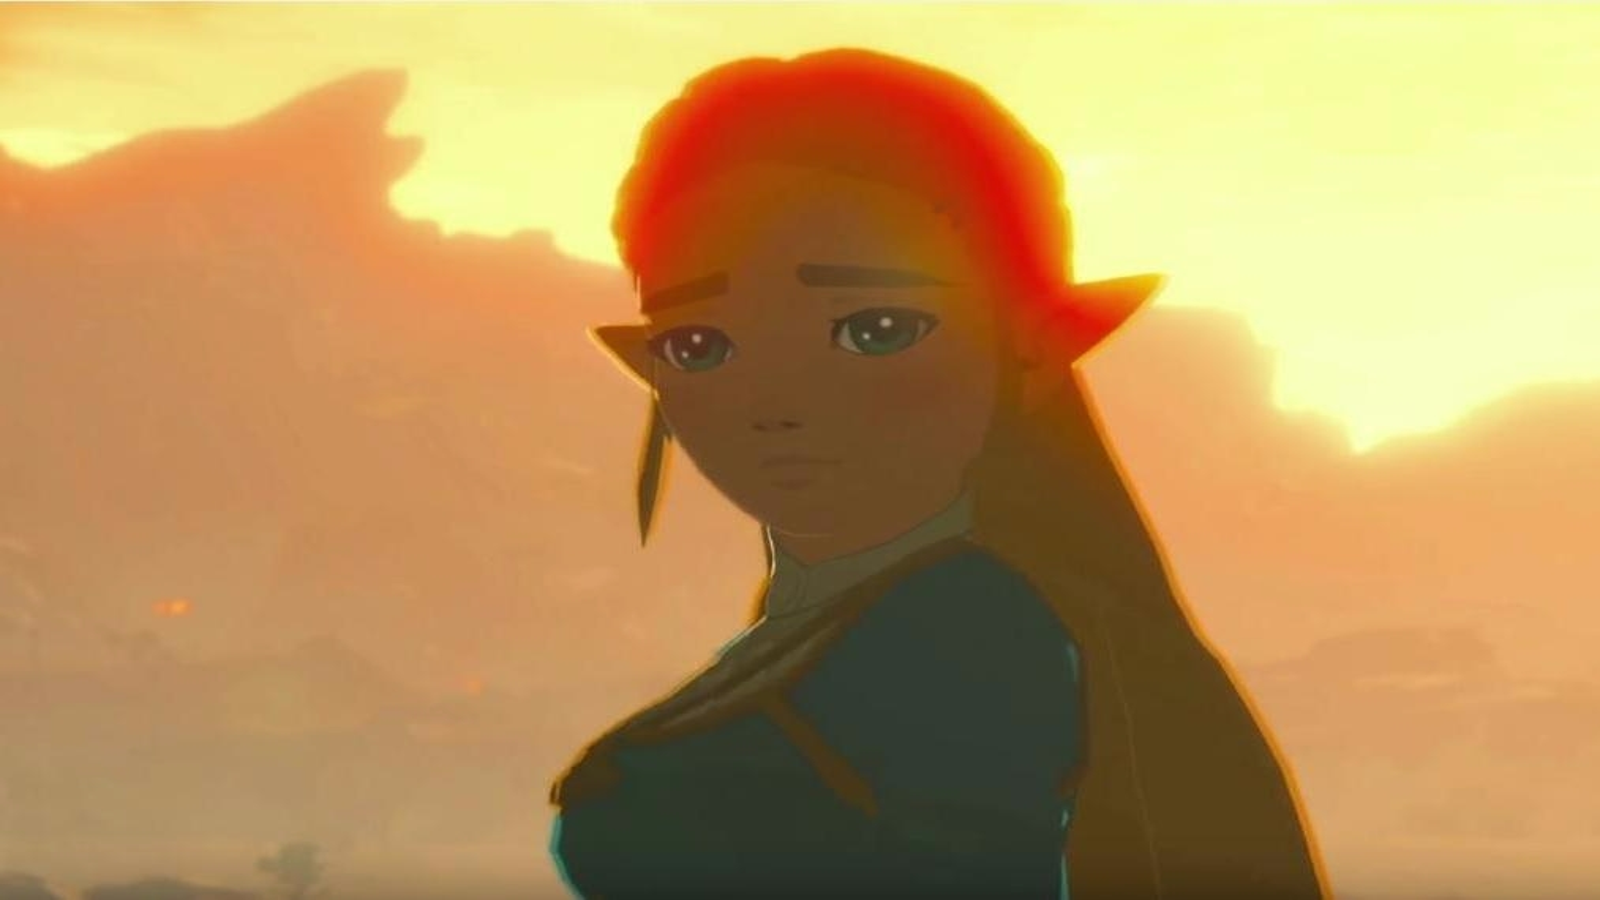 Nintendo's Eiji Aonuma shares his thoughts on Zelda: Breath of the